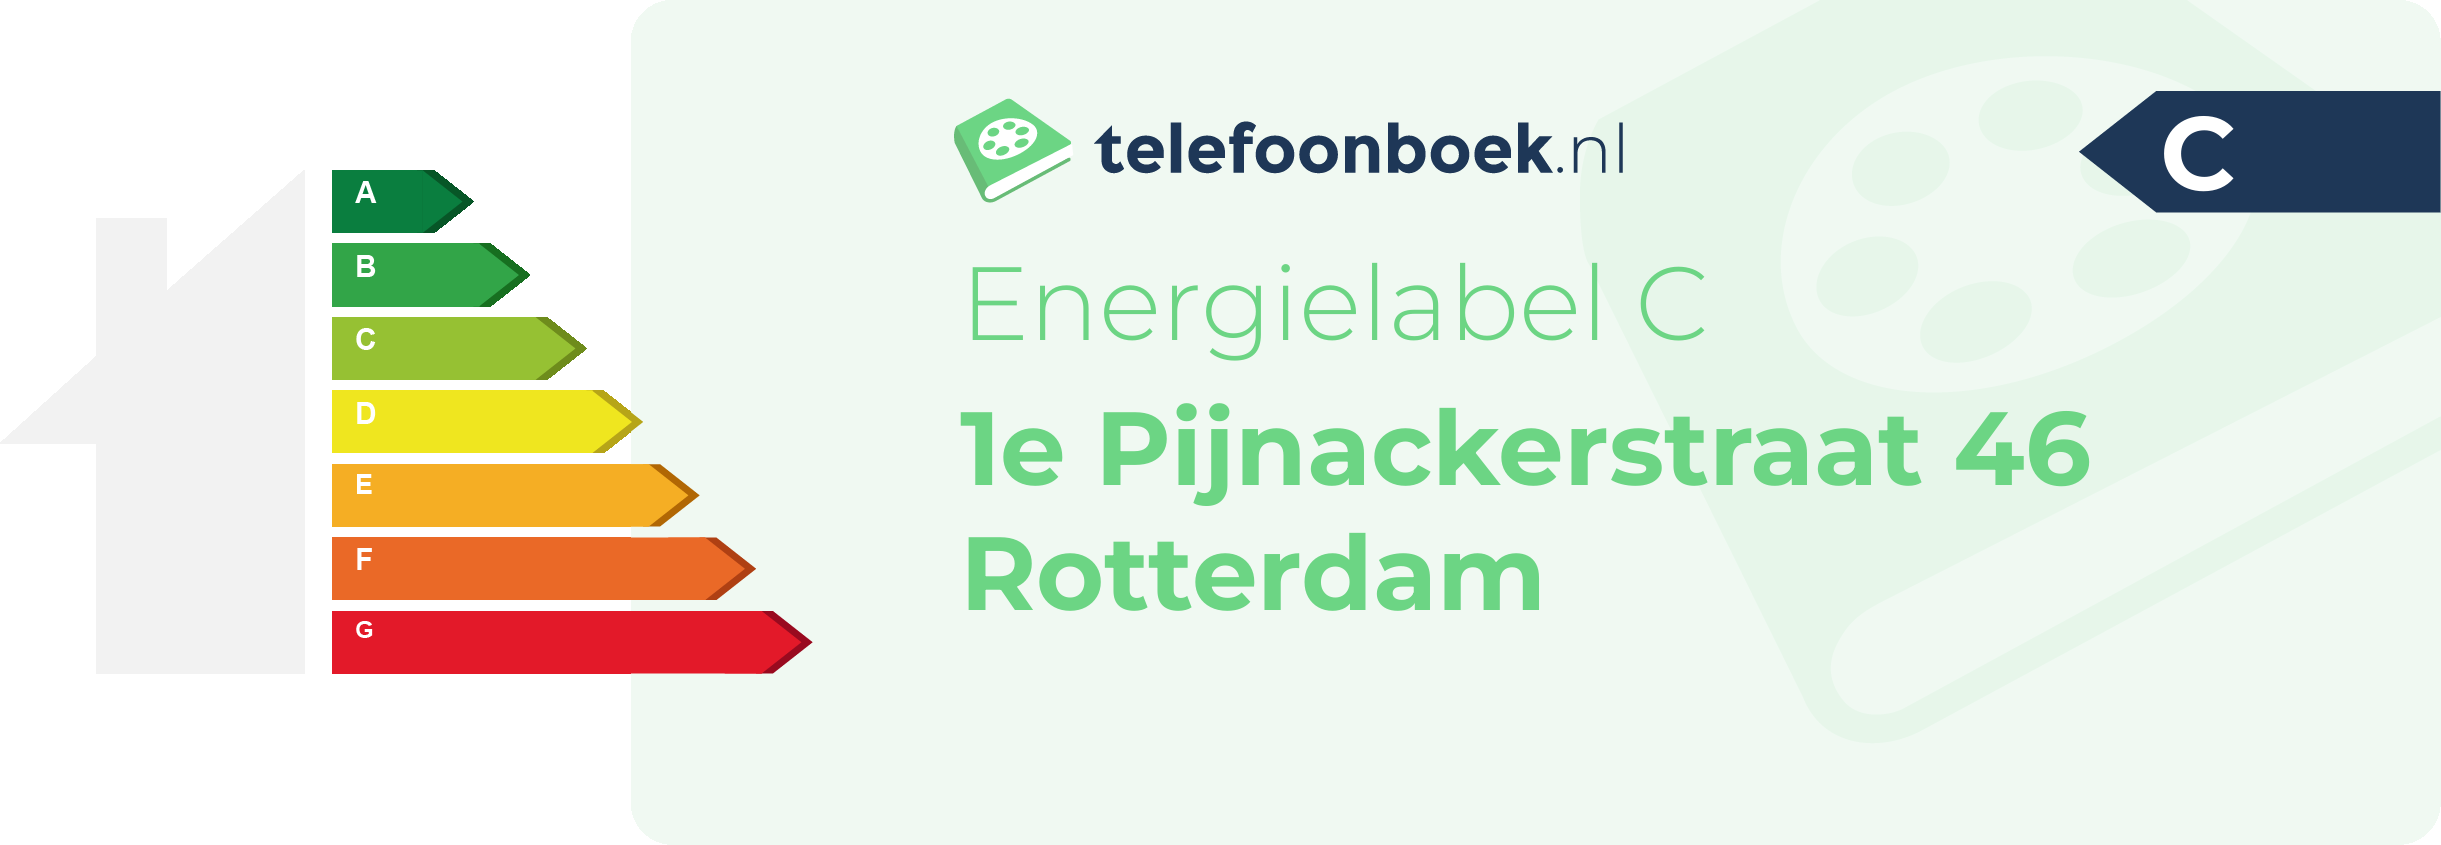 Energielabel 1e Pijnackerstraat 46 Rotterdam